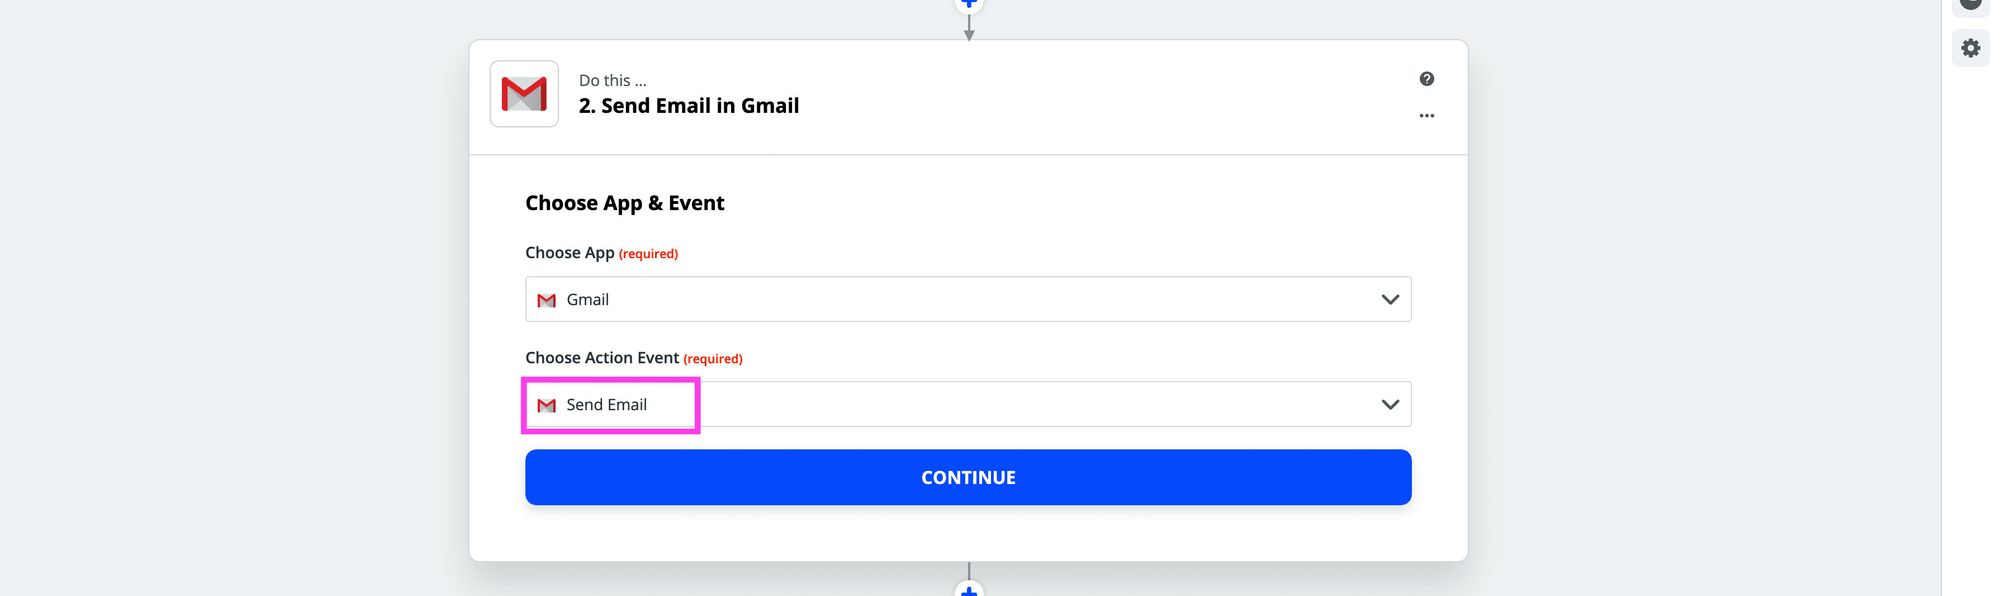 zapier-gmail-send-email-trigger